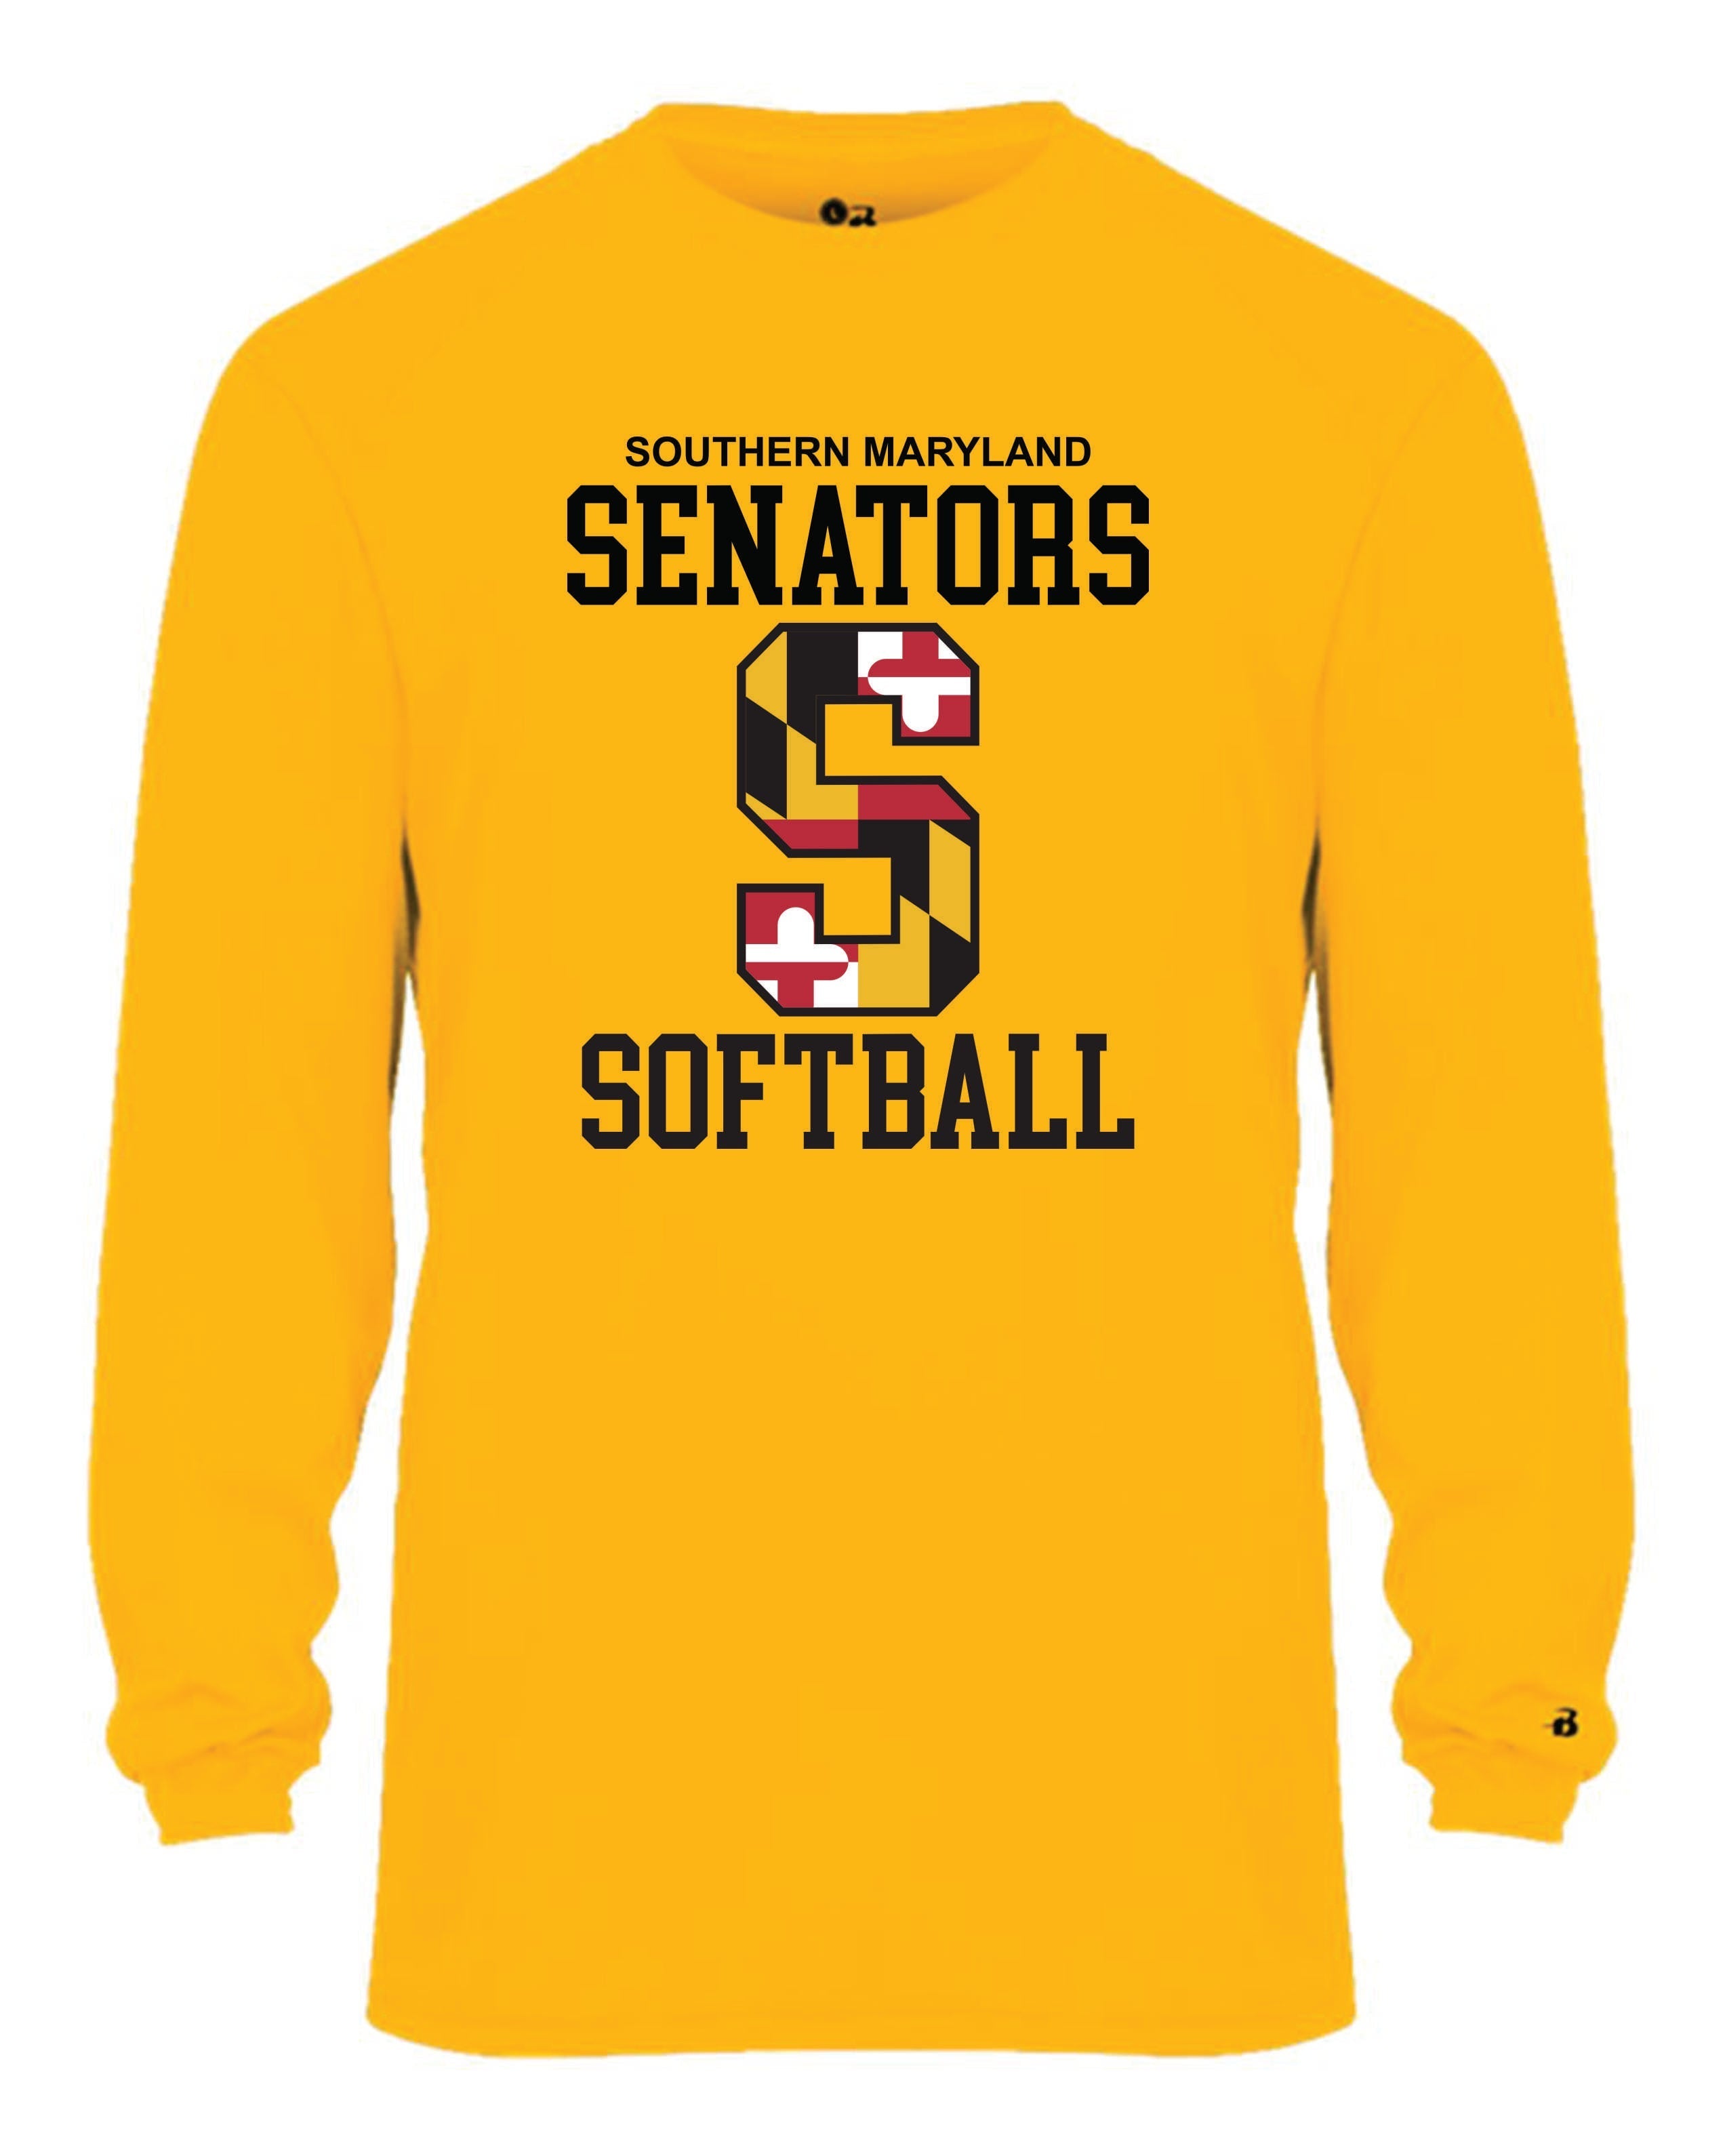 Senators Softball Long Sleeve Dri-Fit Shirt - YOUTH